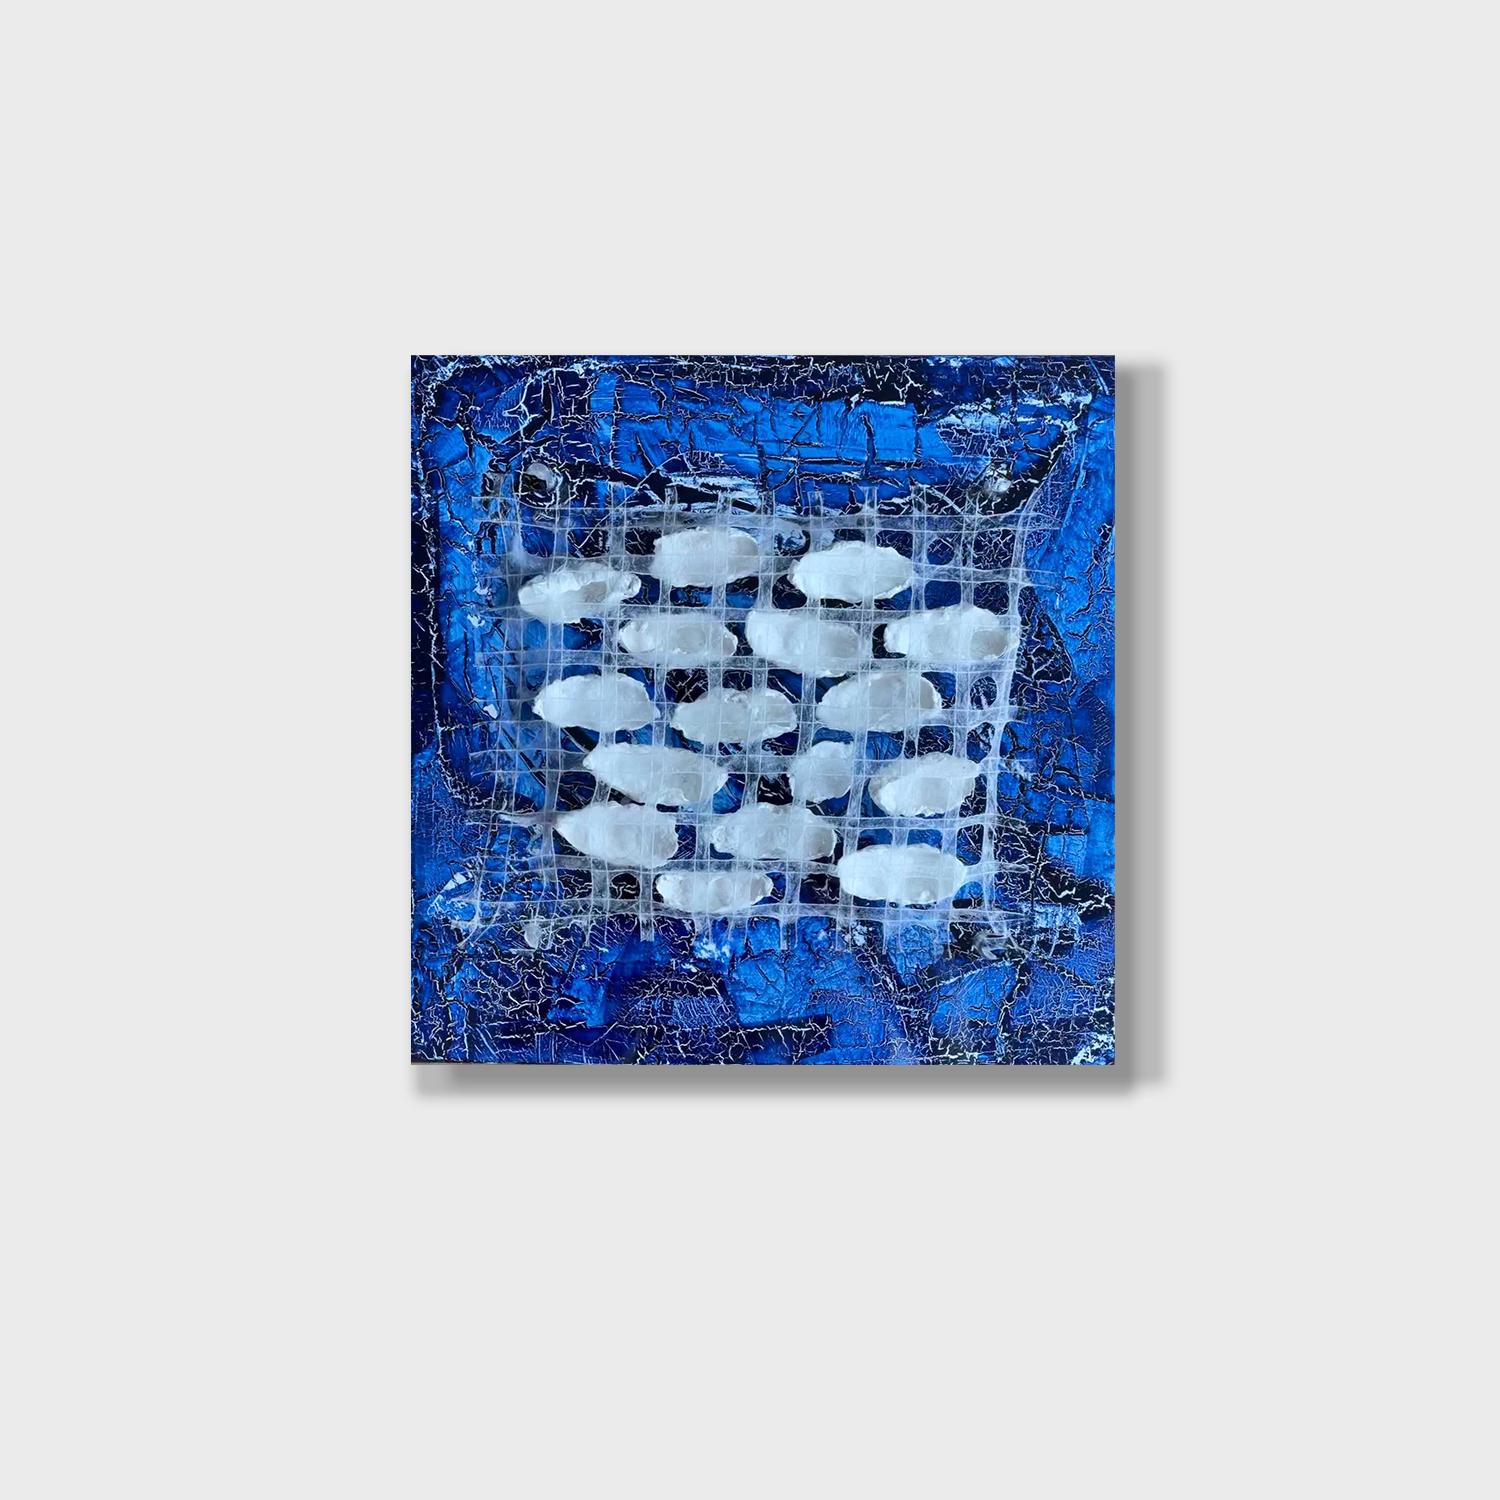 Petite peinture abstraite, « Cocoon » 2021 - Painting de Kathleen Kane-Murrell 